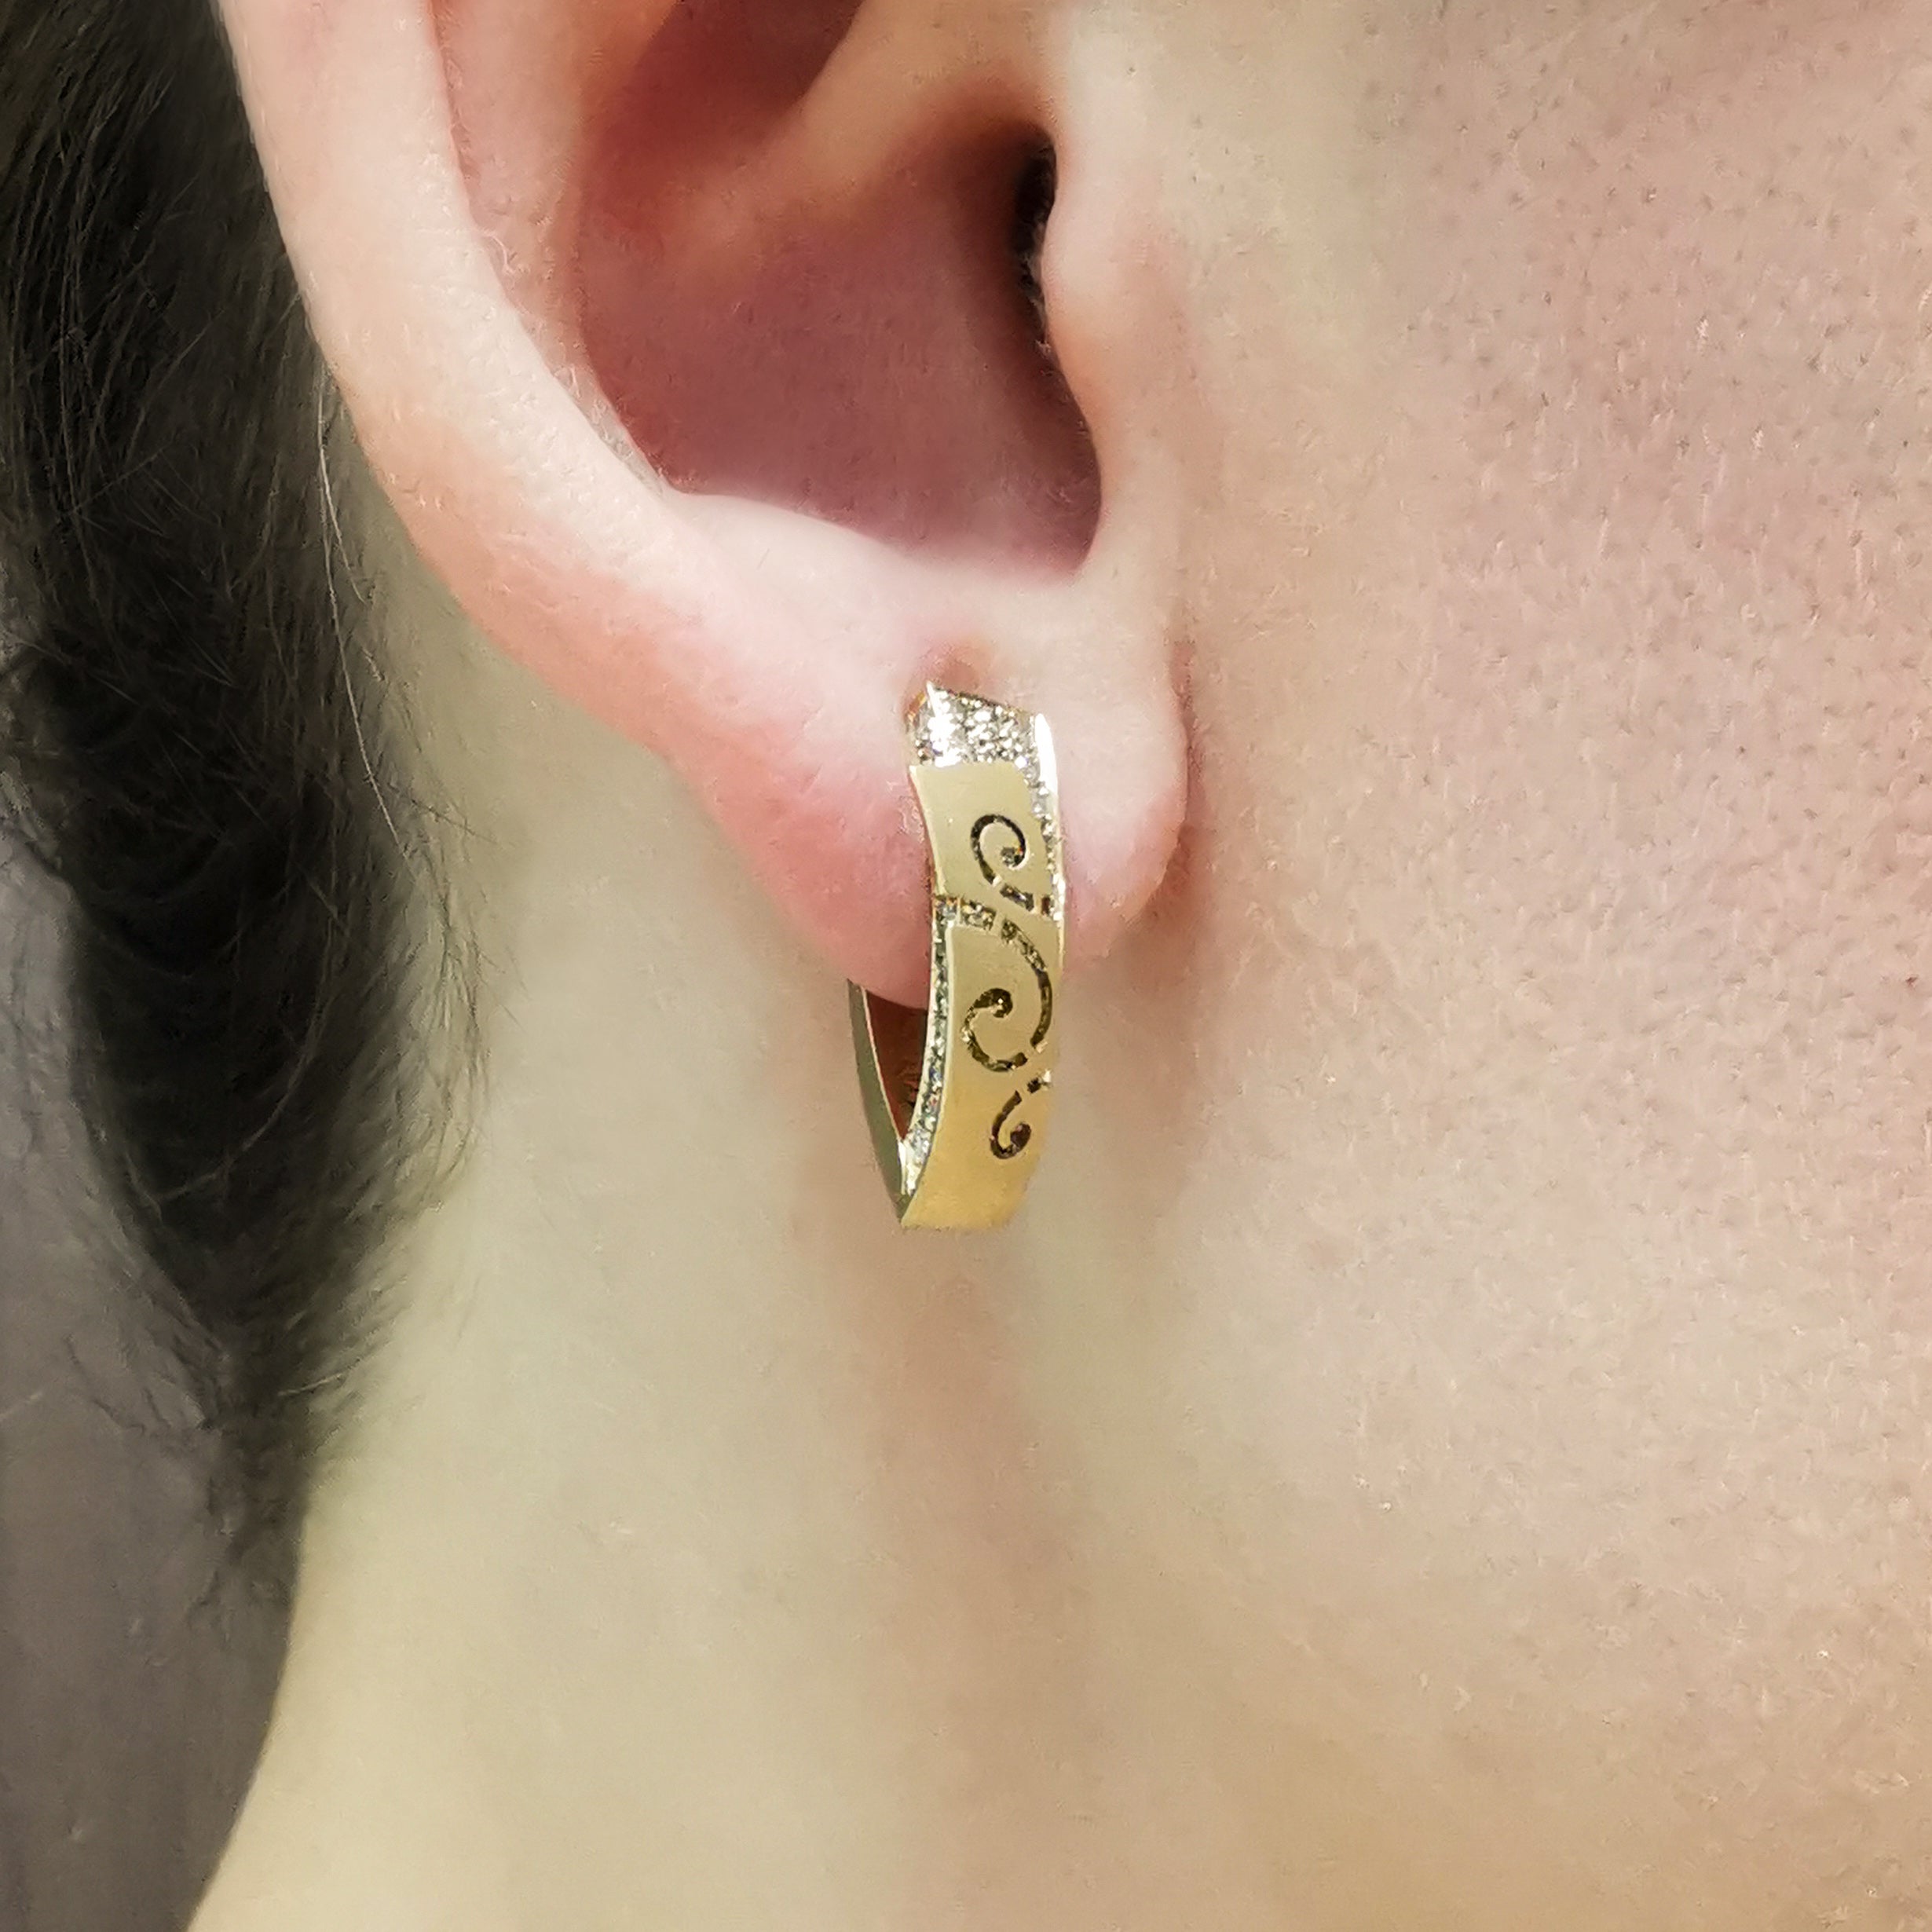 E 0003-1, 18K Yellow Gold, Champagne Diamonds Earrings